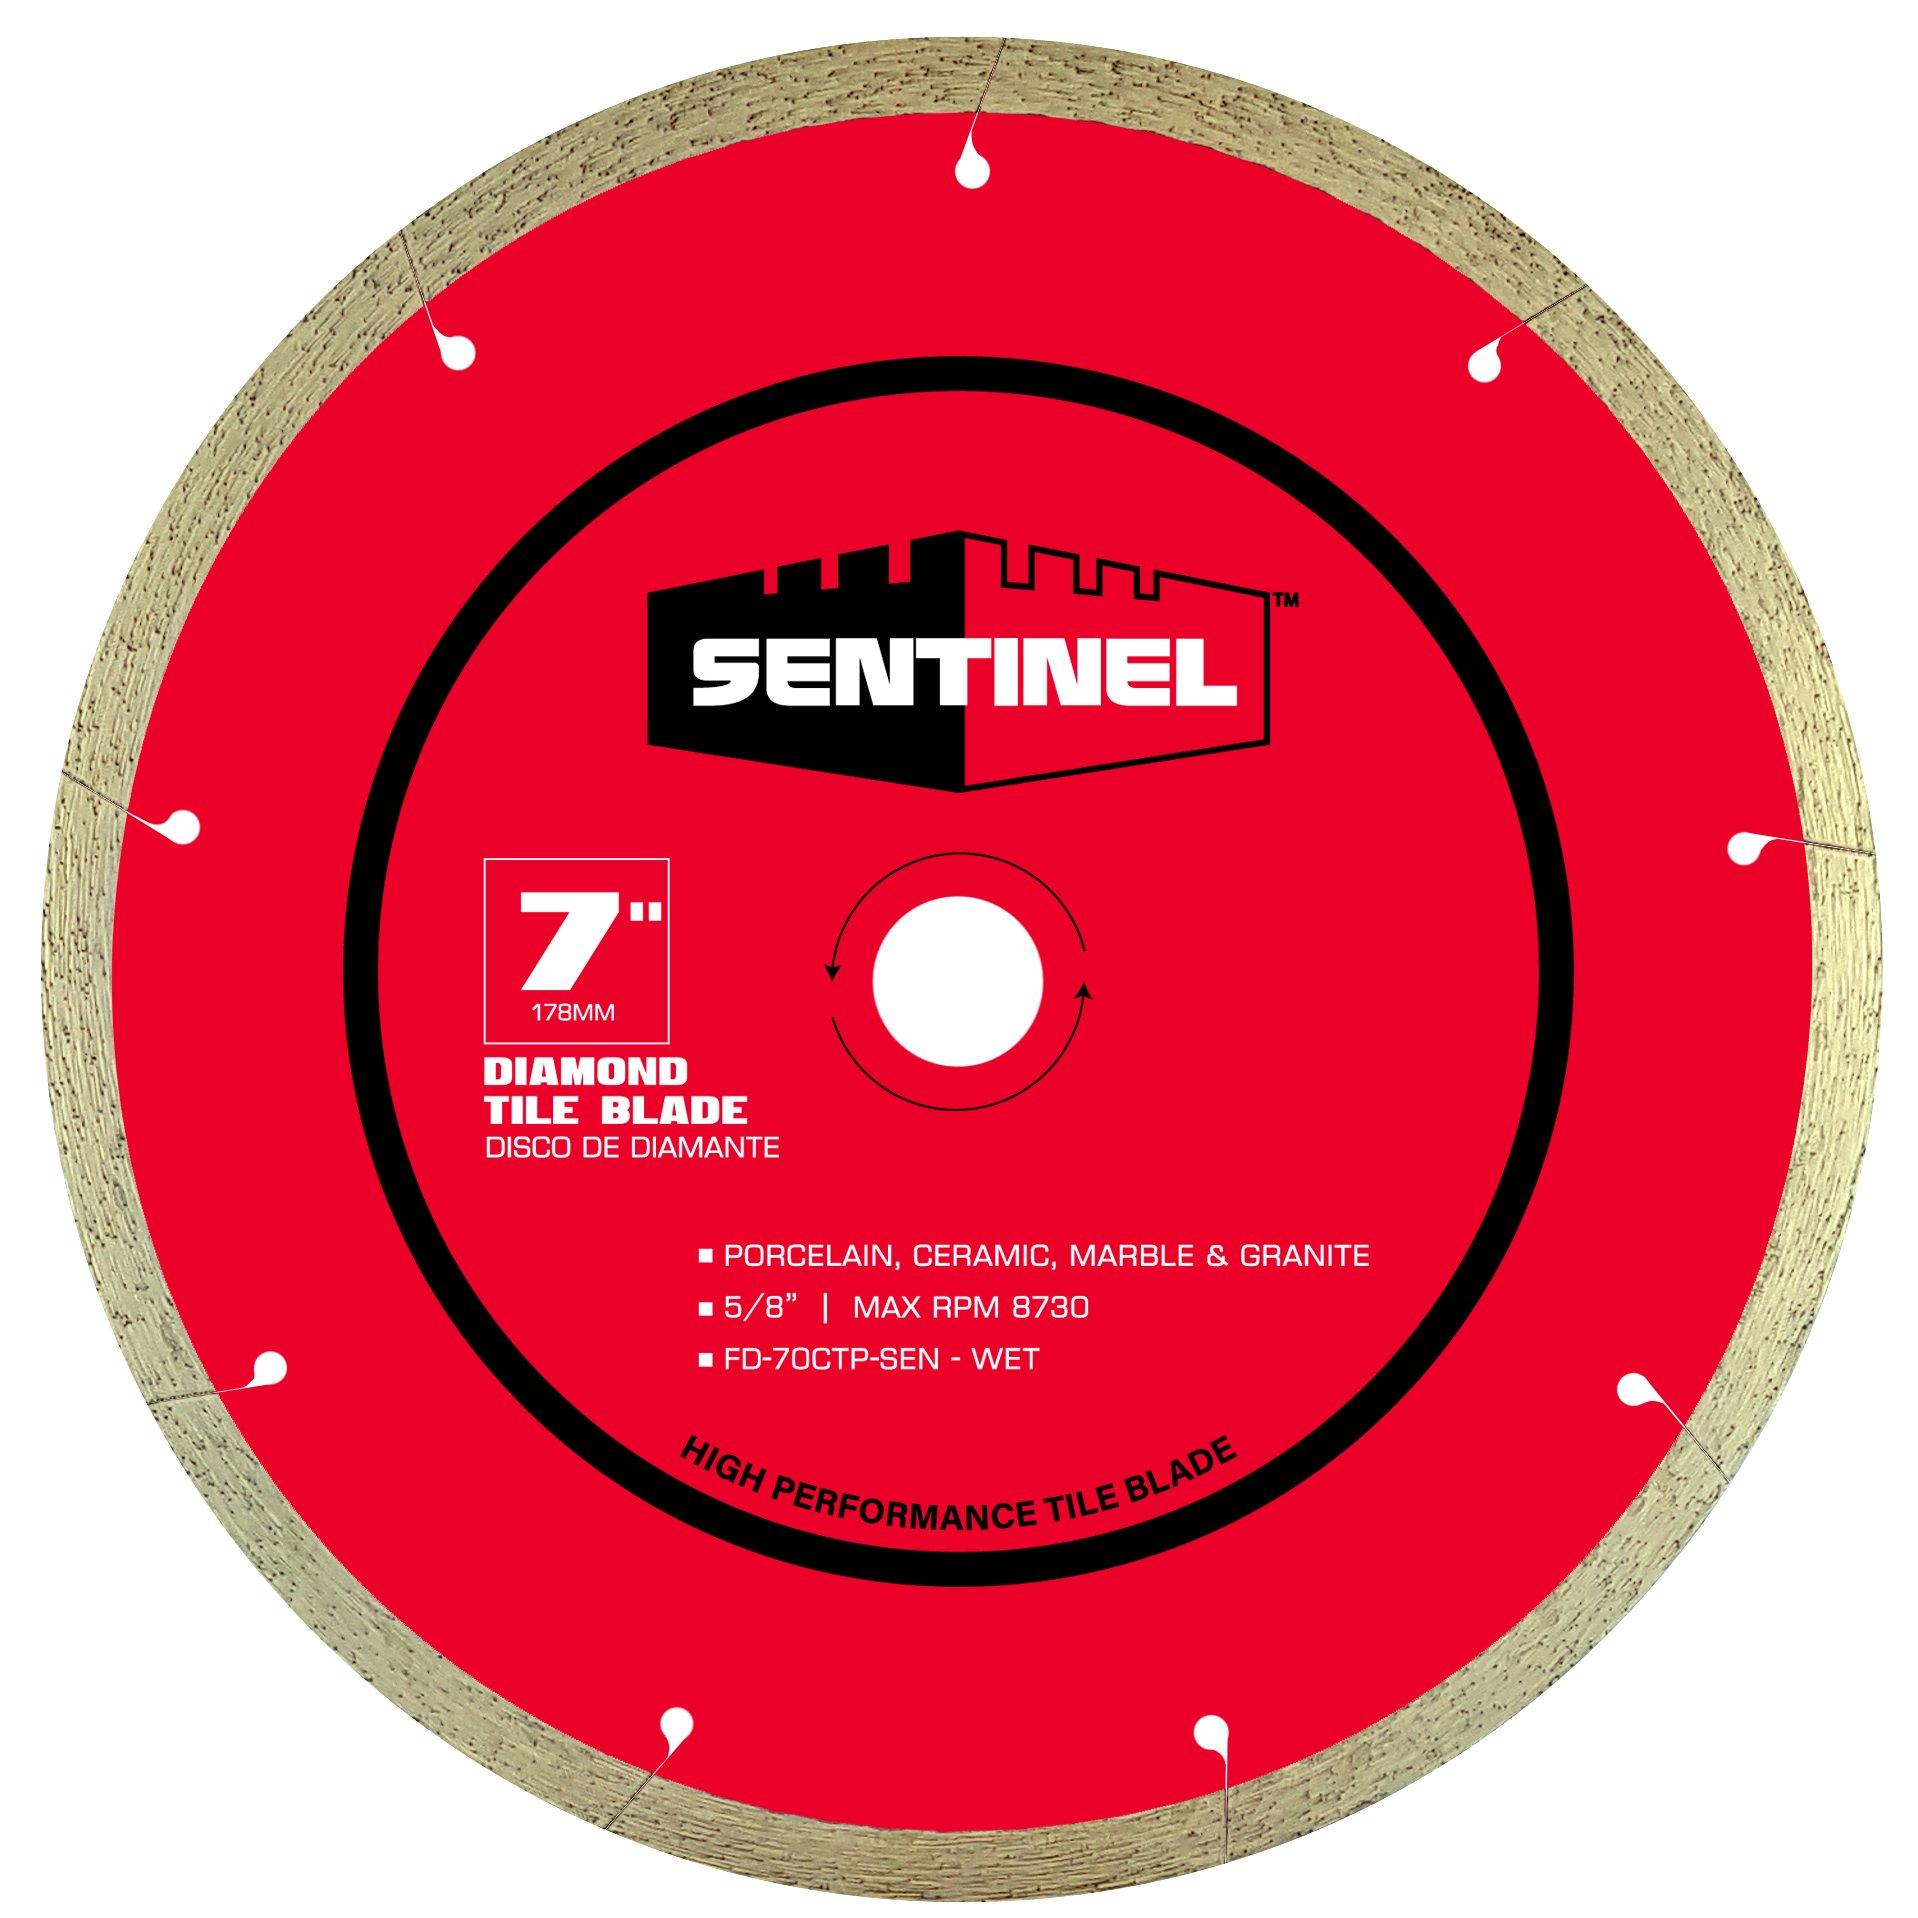 Sentinel 7in. Tile Diamond Blade